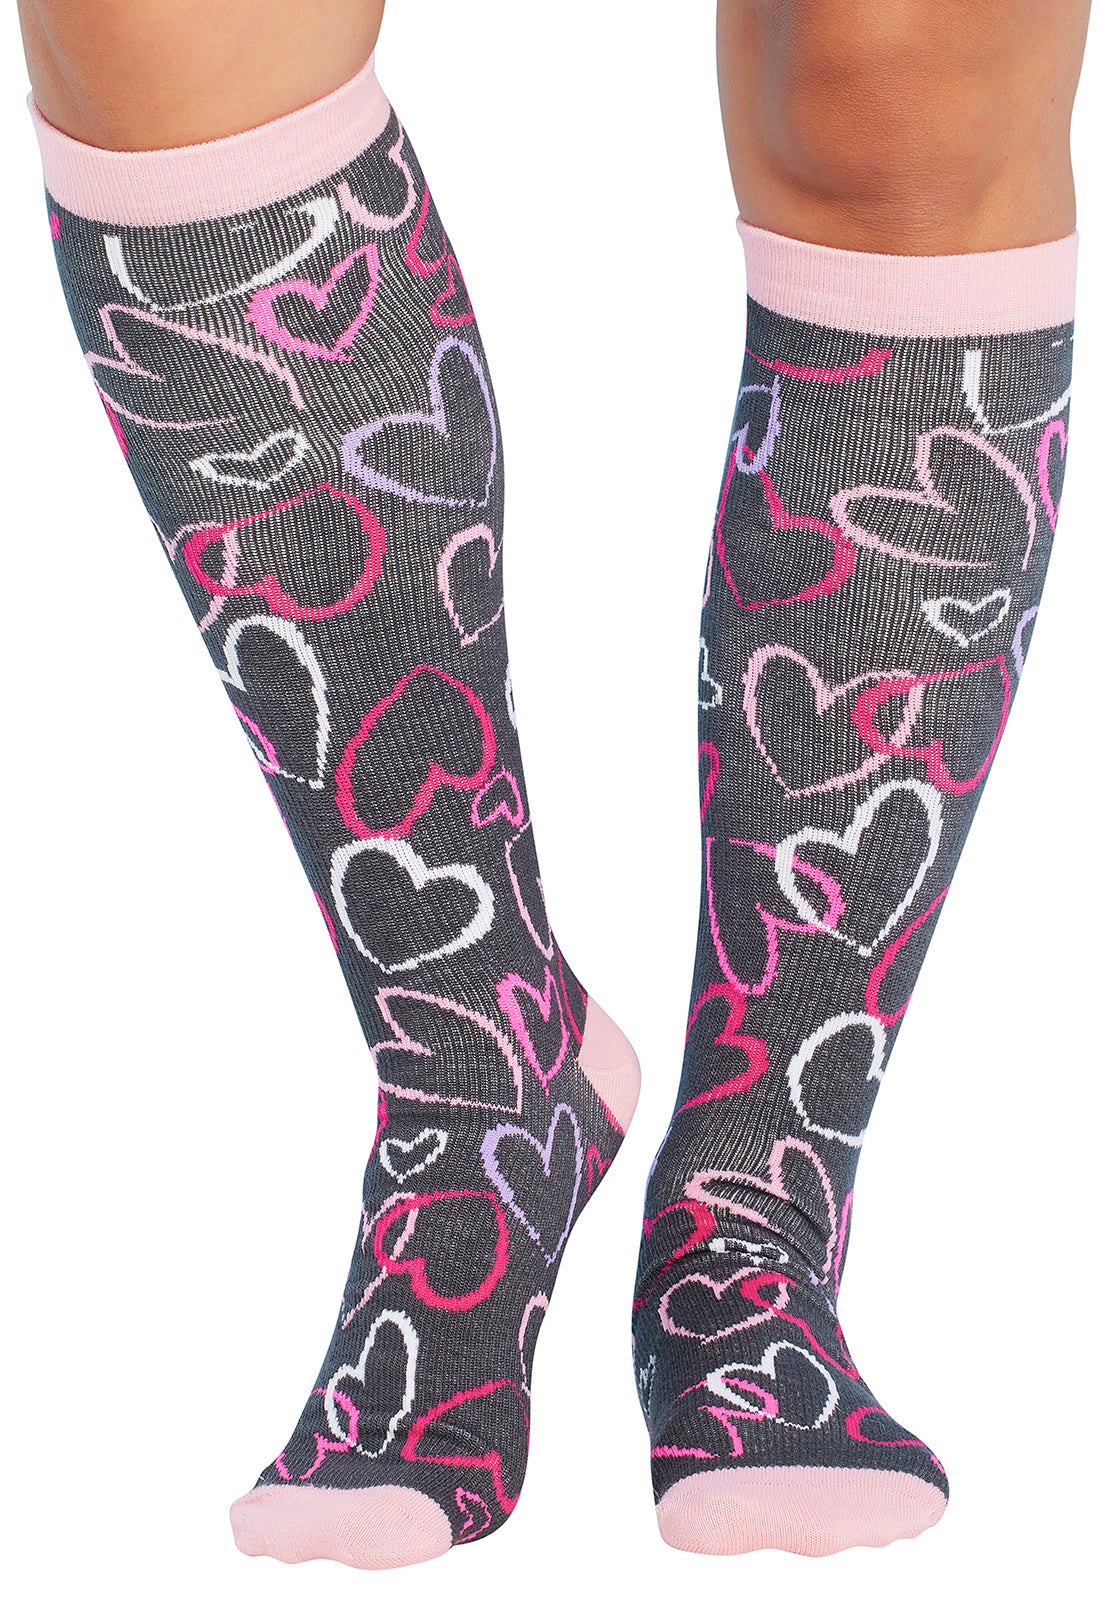 Regular Fit - Compression Socks 10-15mmHg Compression Socks Cherokee Legwear Sketch Hearts  